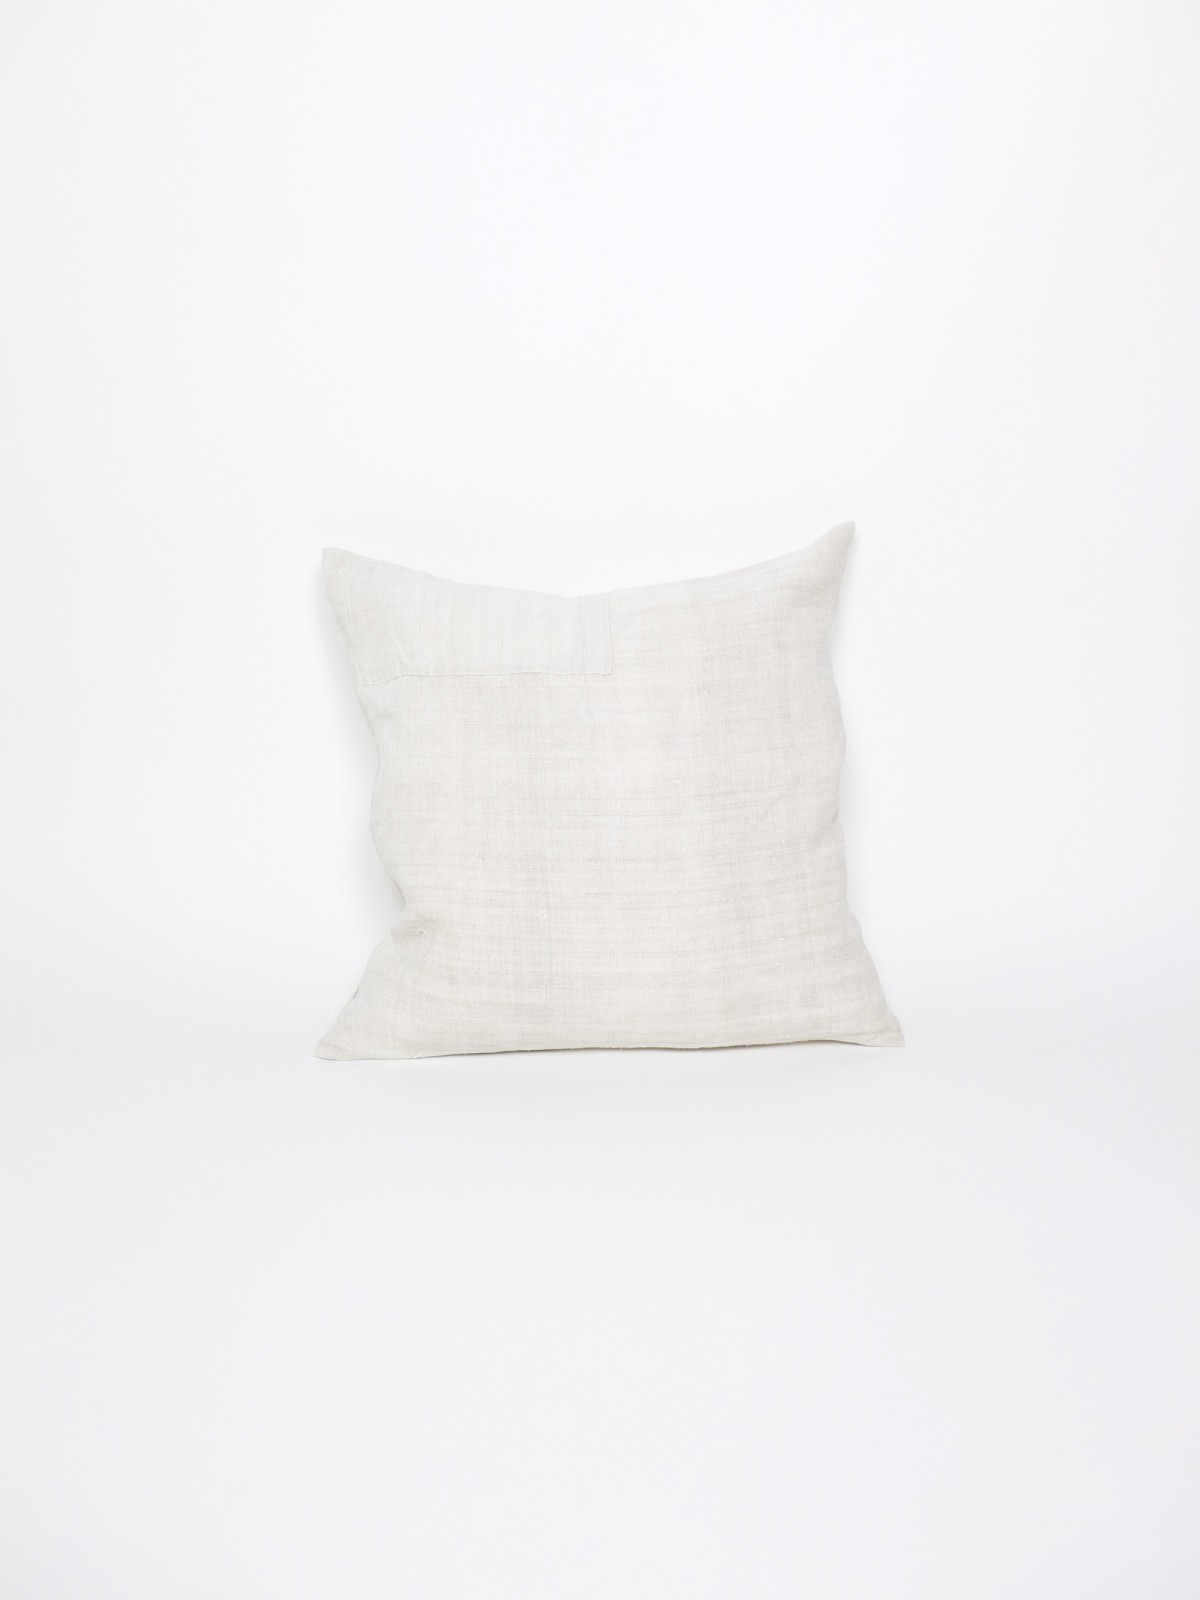 vintage french white linen fabric cushion, brown.remake cushion, sheet